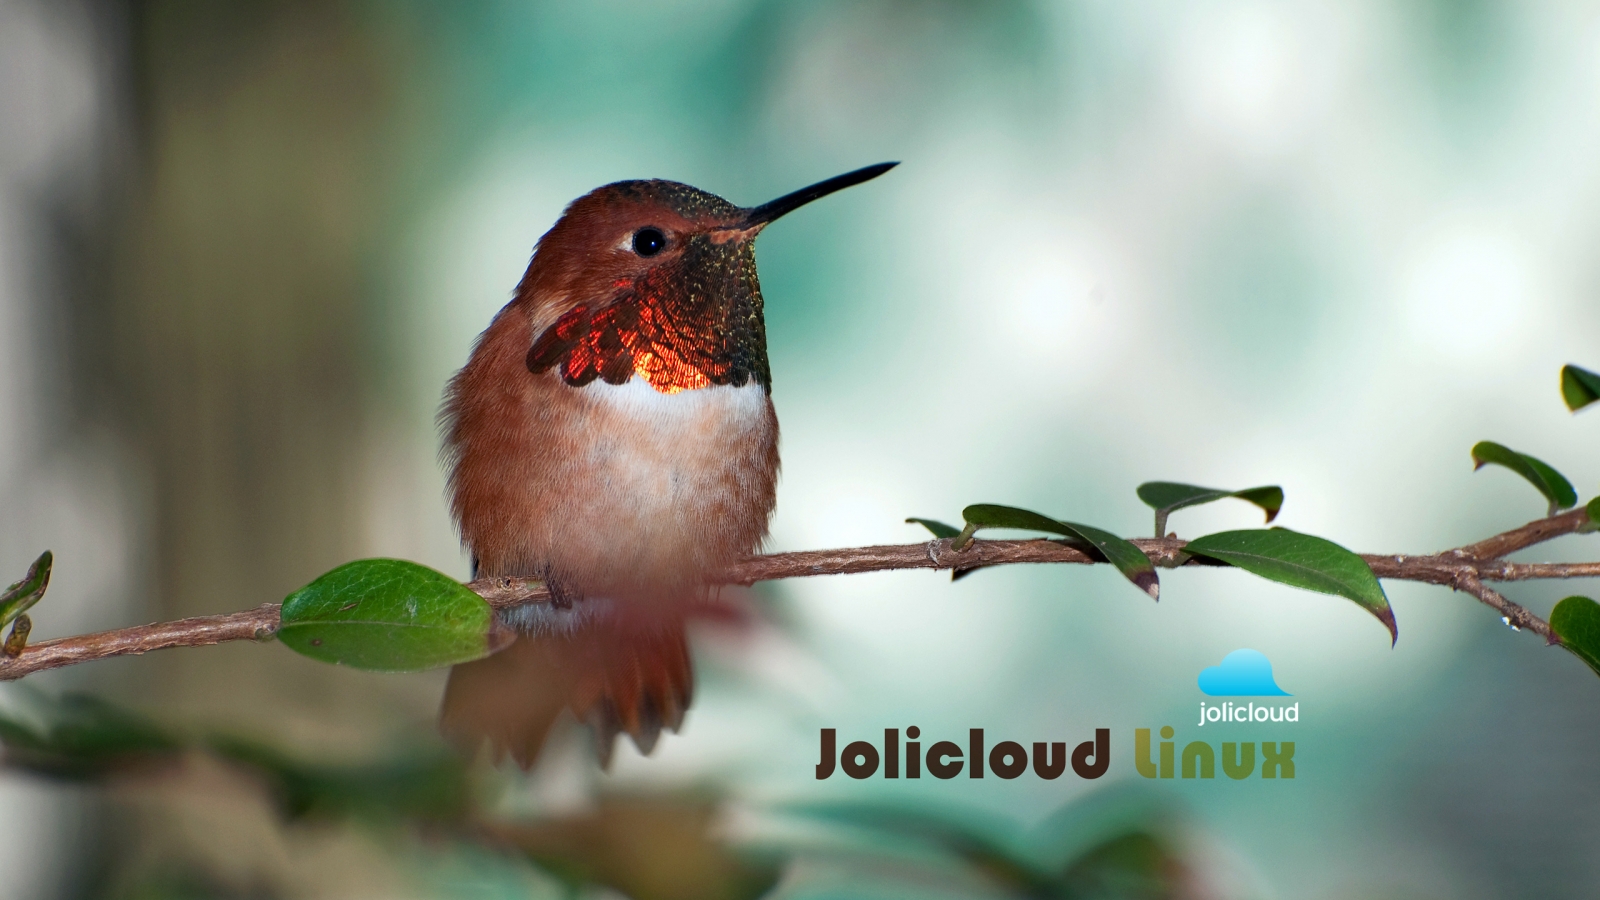 Jolicloud Linux Hummingbird for 1600 x 900 HDTV resolution